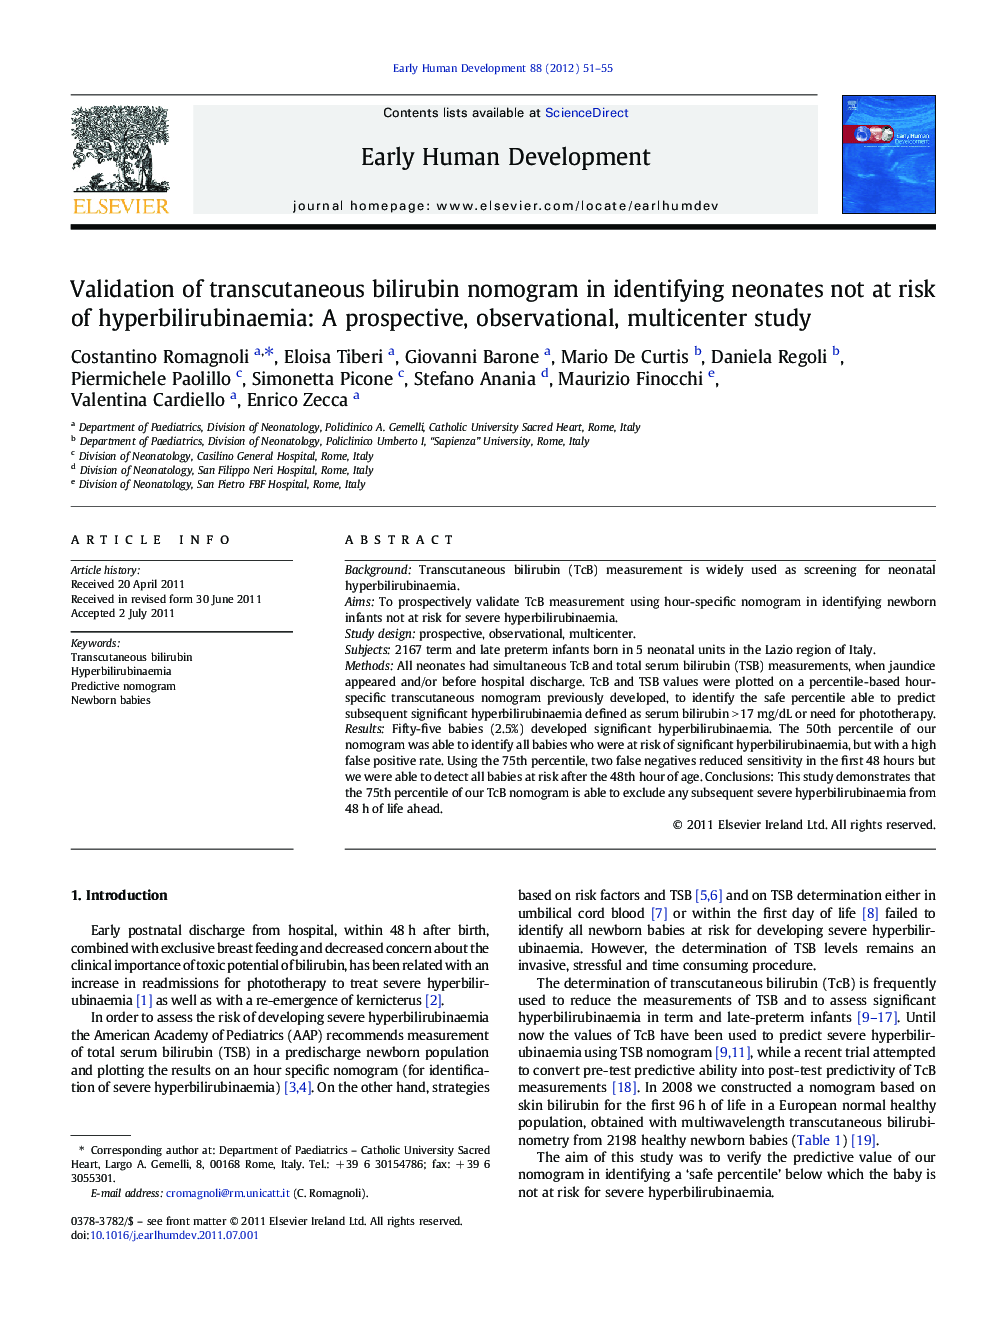 Validation of transcutaneous bilirubin nomogram in identifying neonates not at risk of hyperbilirubinaemia: A prospective, observational, multicenter study